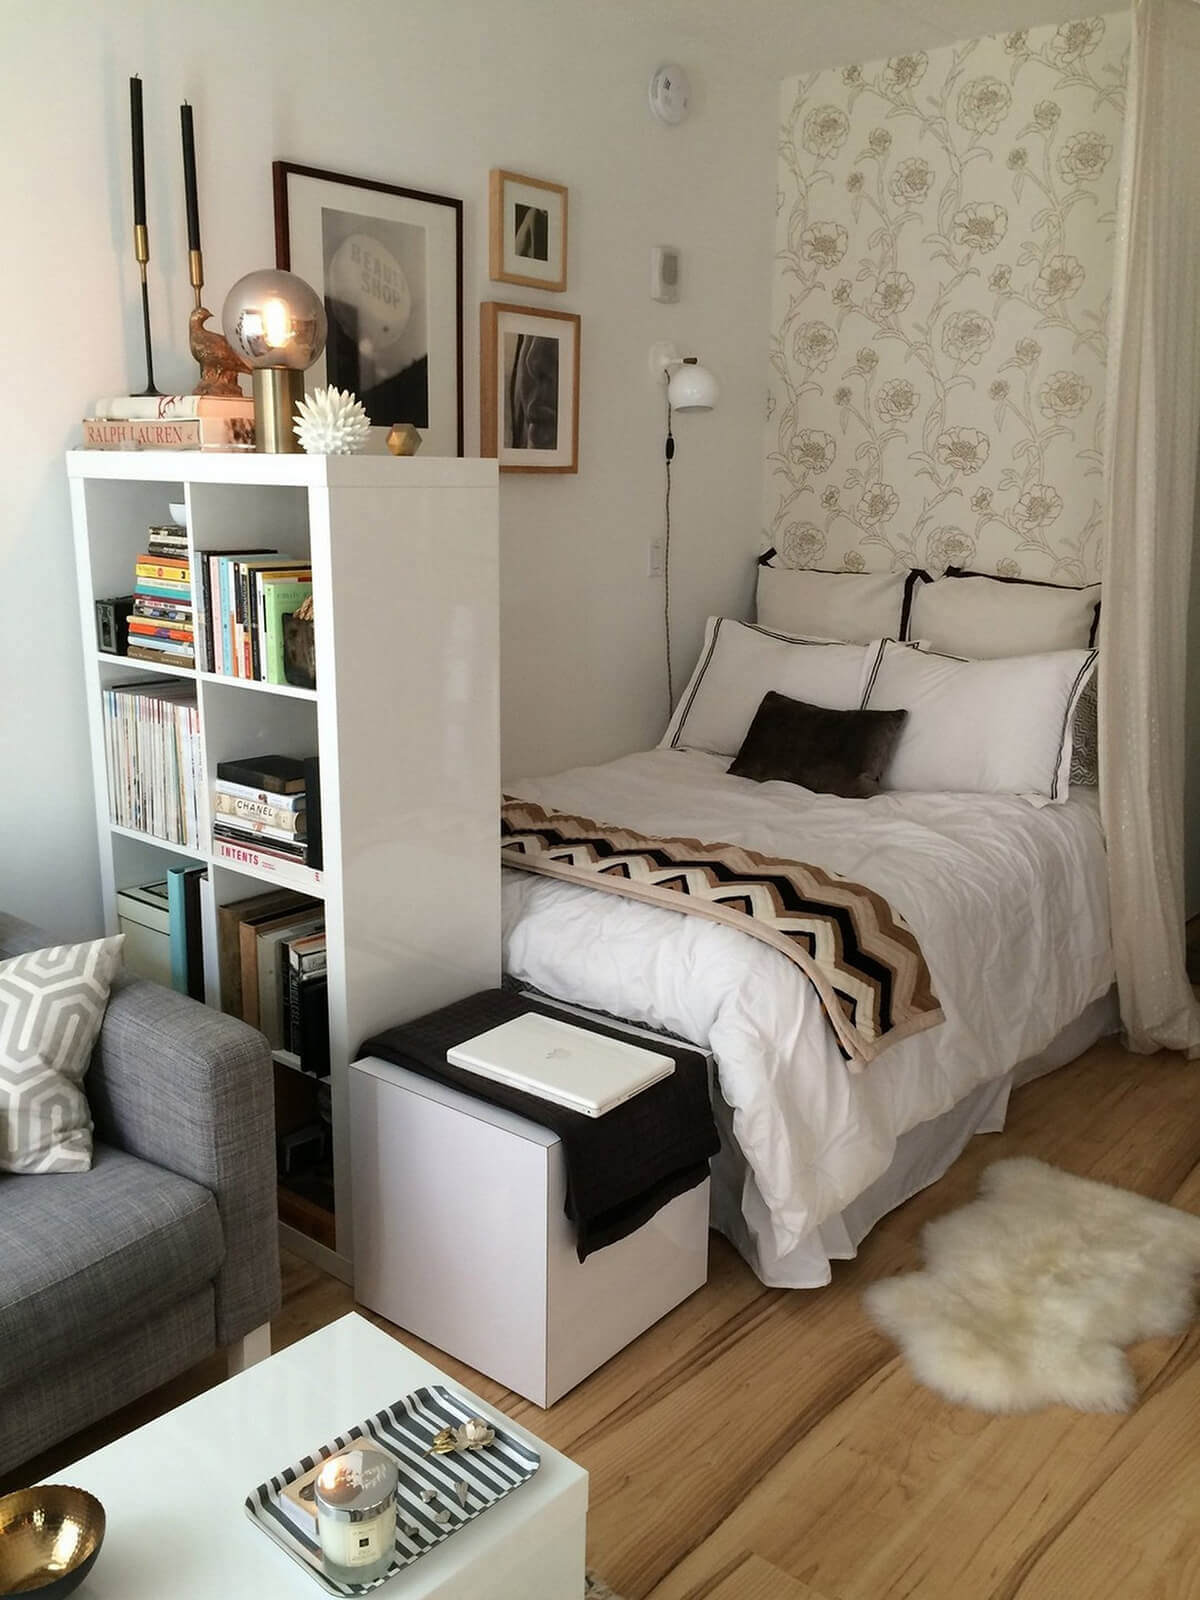 Wonderful small bedroom organizing ideas 28 Small Bedroom Organization Ideas That Are Smart And Stylish Sharp Aspirant